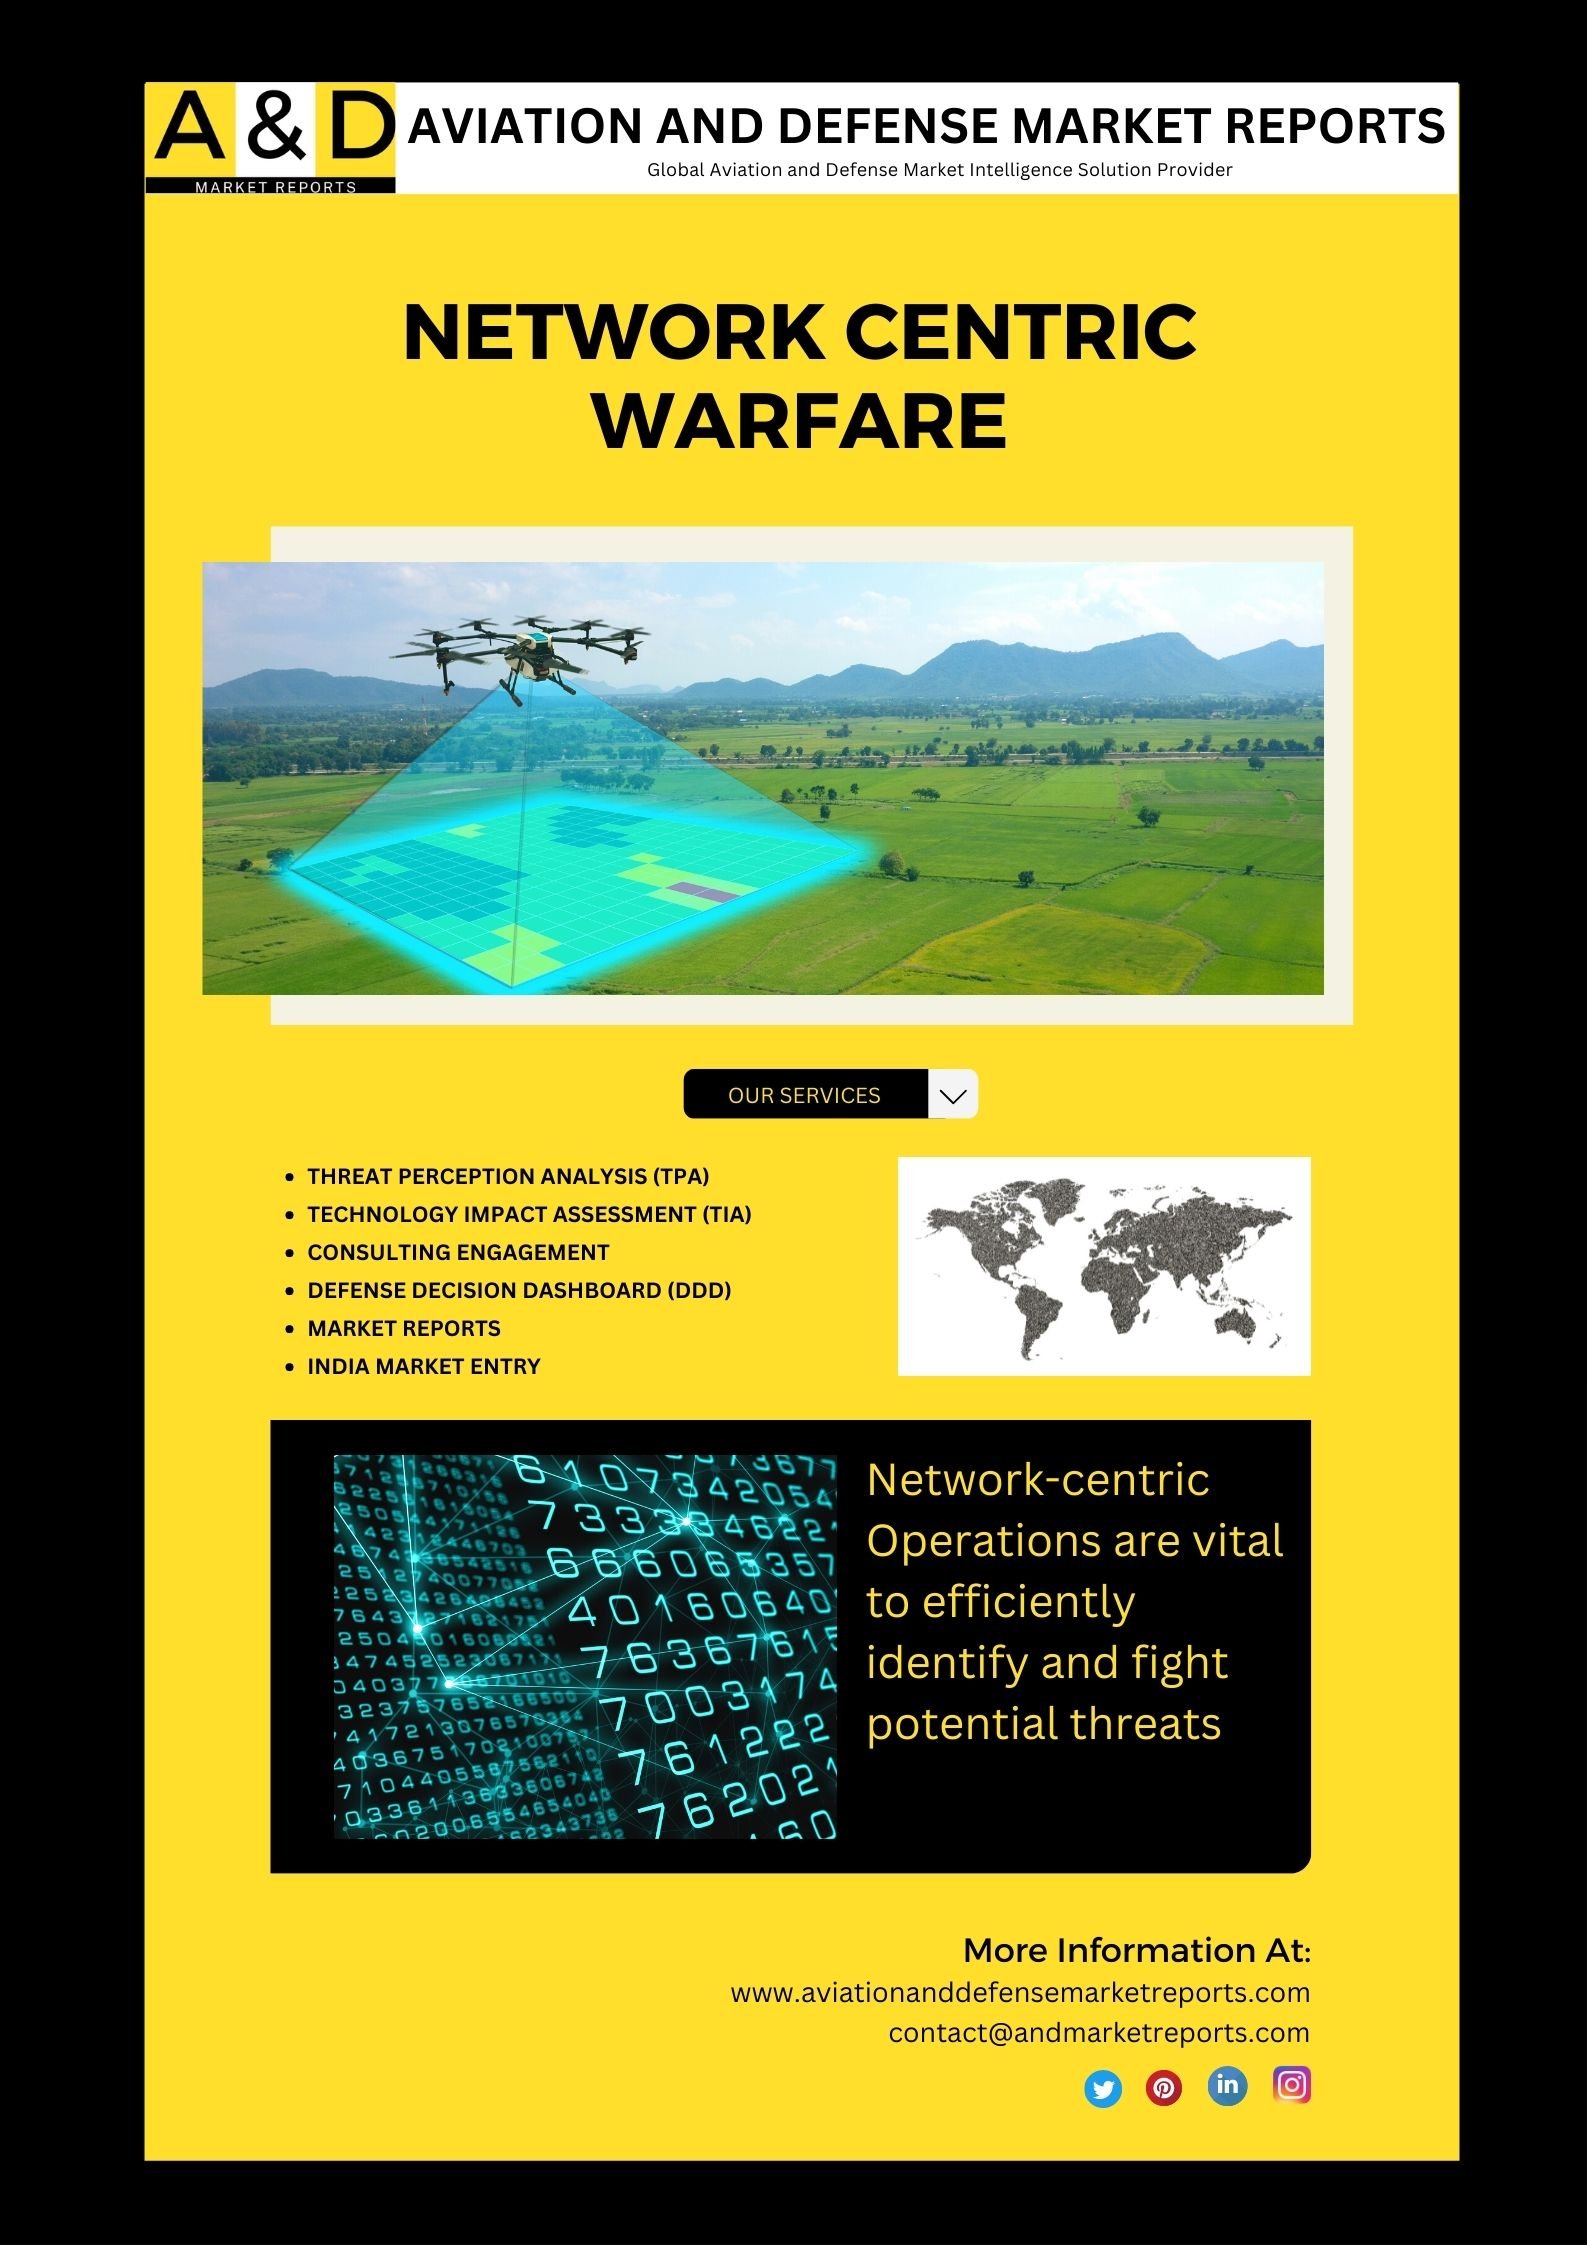 Network Centrics Warfare Gaining Momentum Despite Operational Challenges